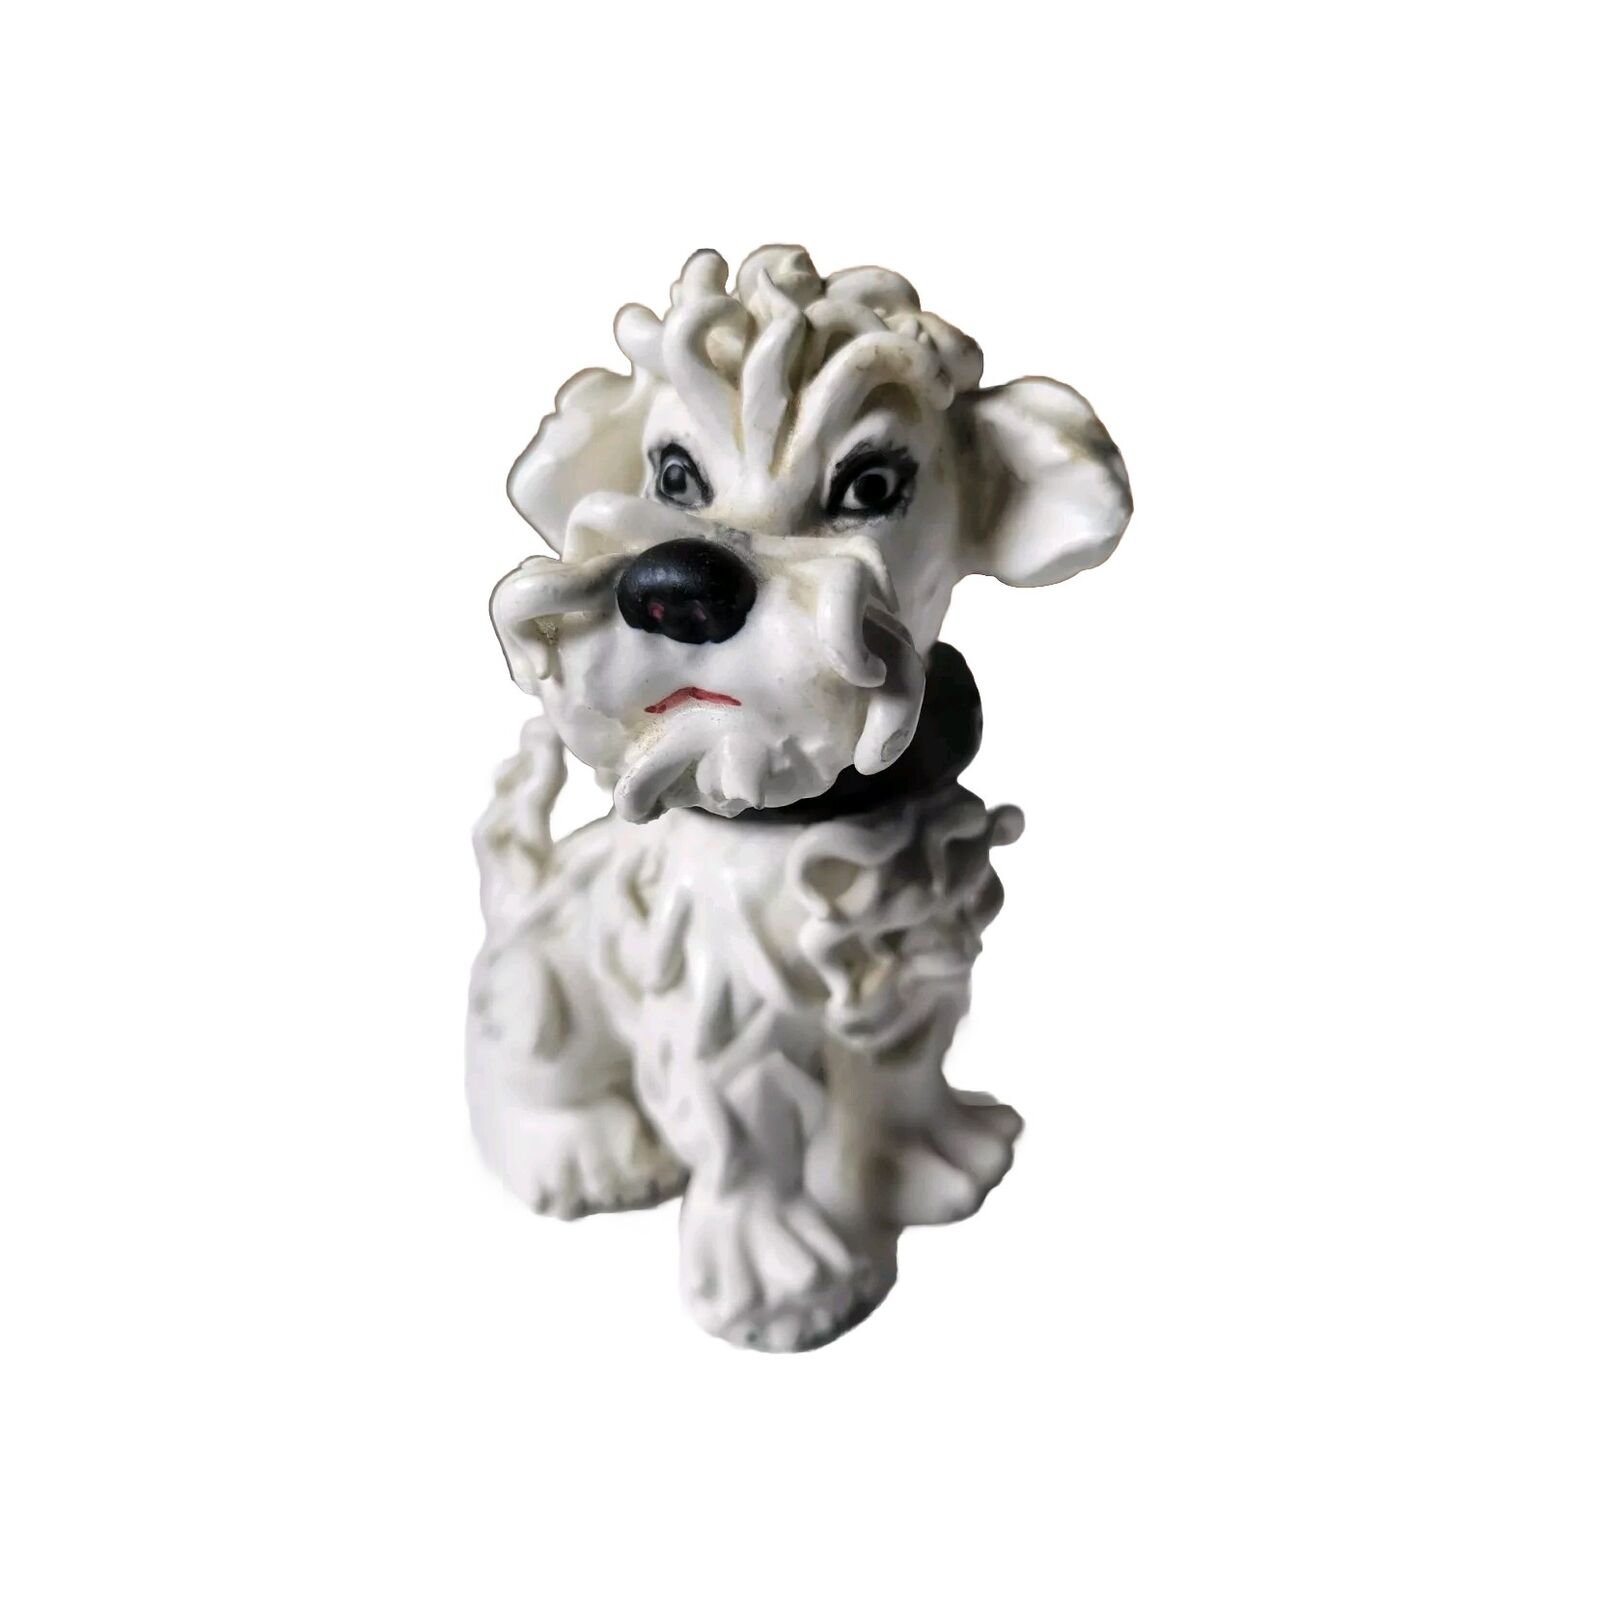 Vintage White Ceramic Standing Spaghetti Poodle Figurine W/Collar Italy 5 1/2”